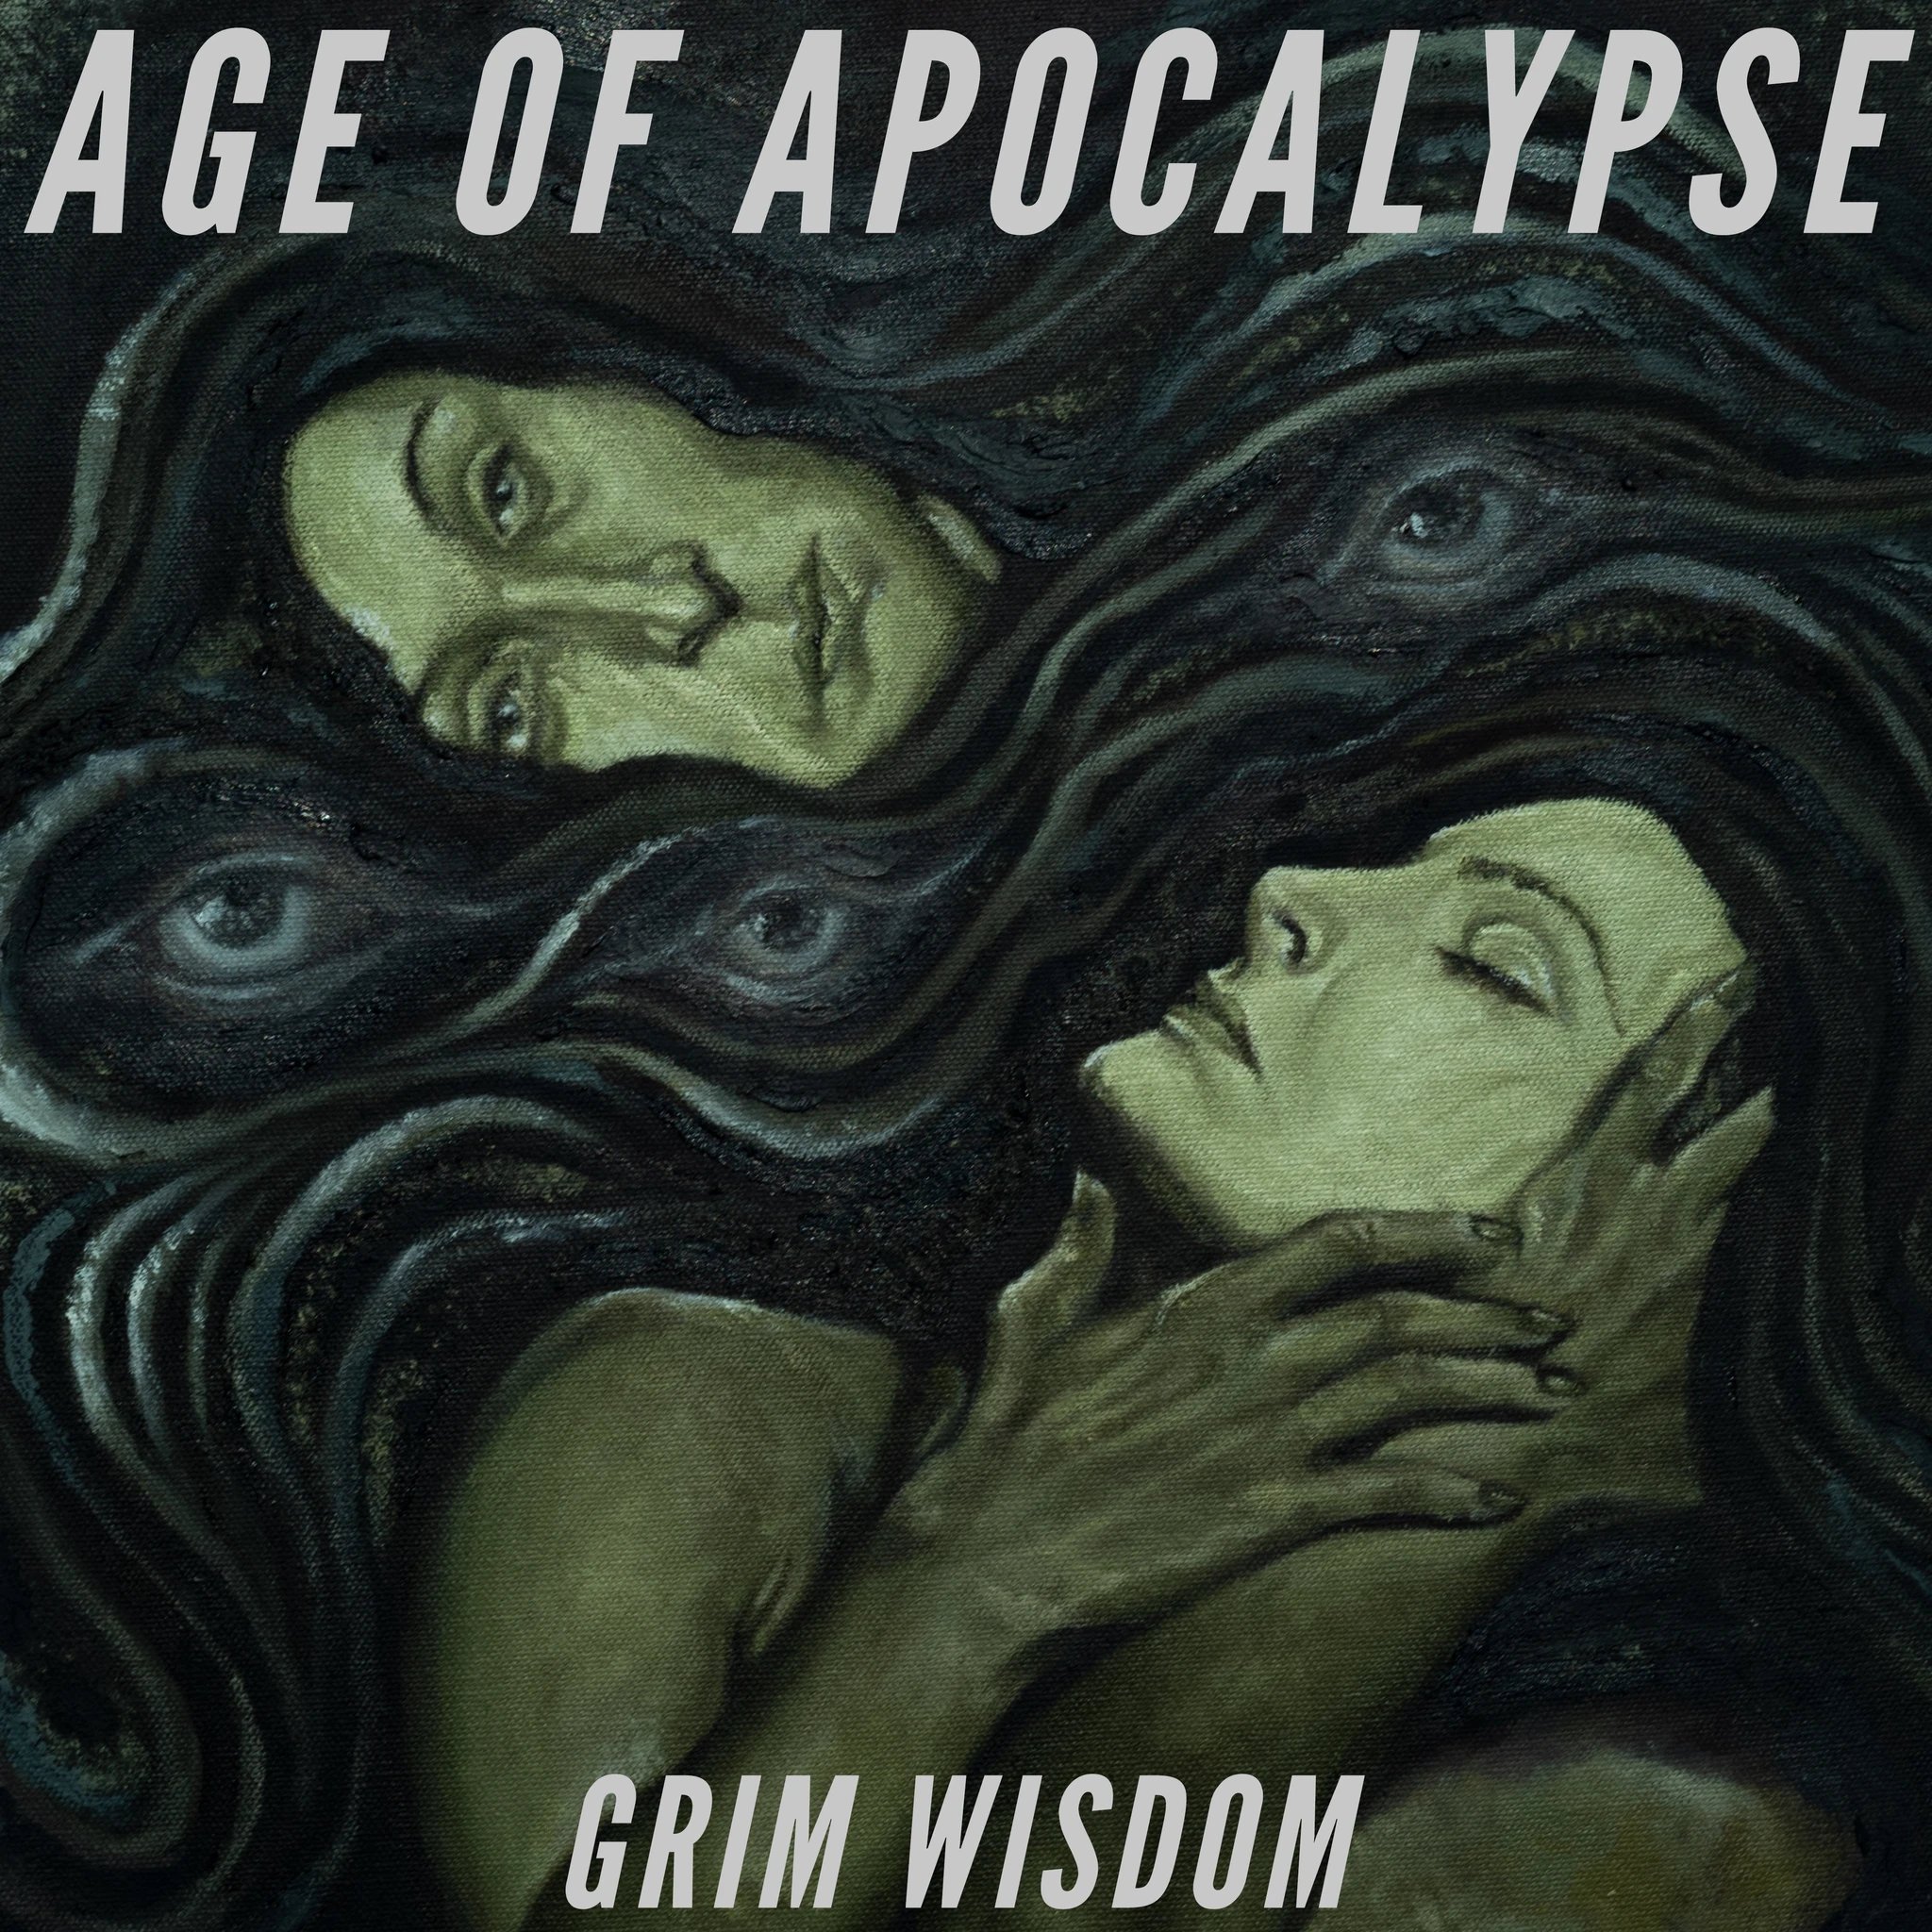 Age of Apocalypse - Grim Wisdom - Cover.jpg